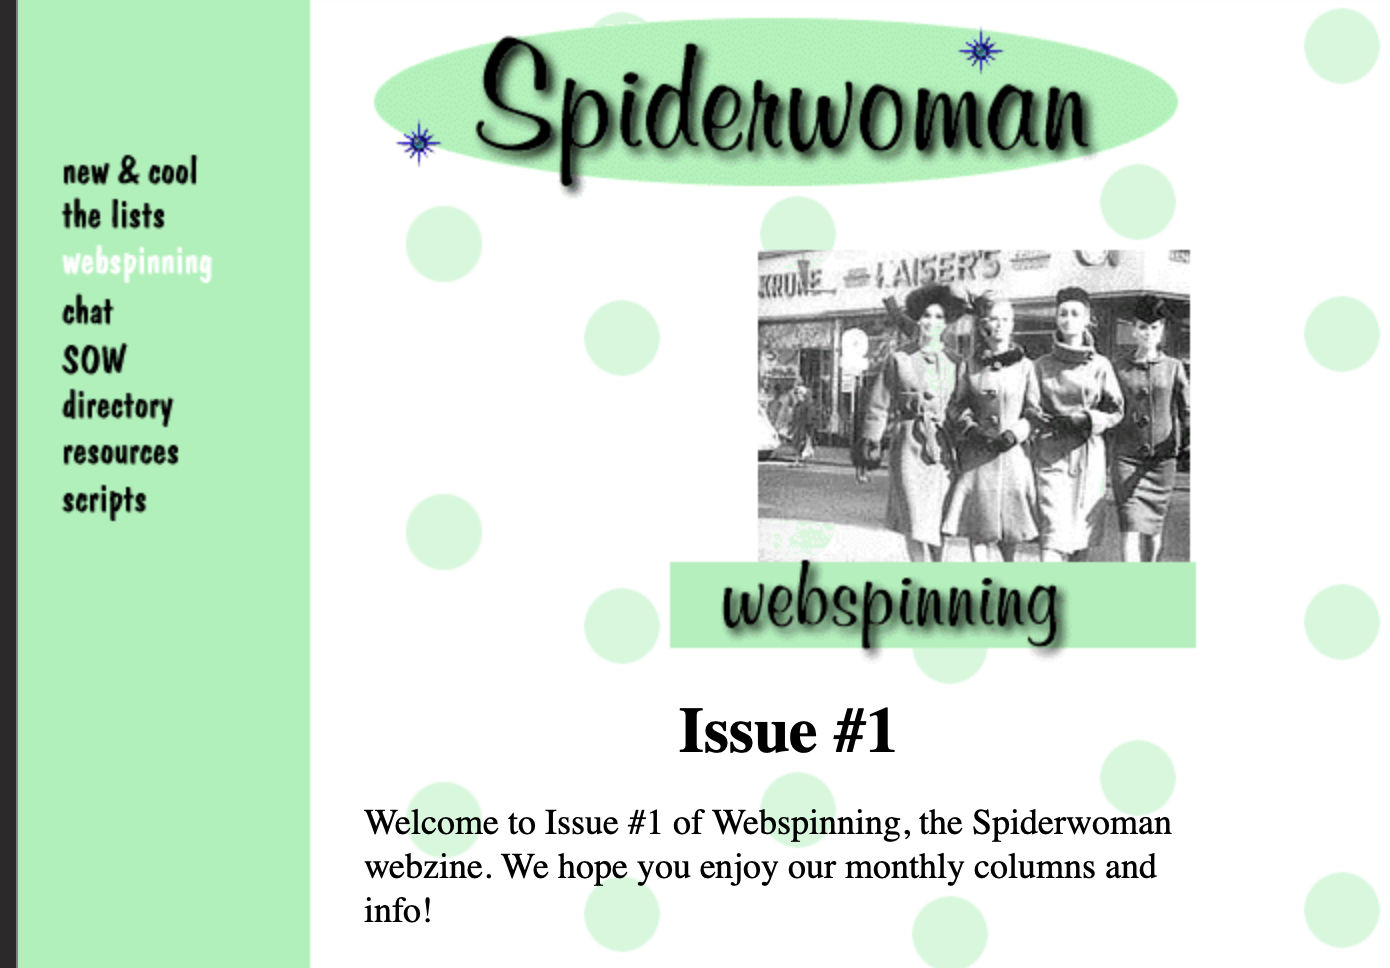 A screenshot from the short-lived Spiderwoman webzine, webspinning